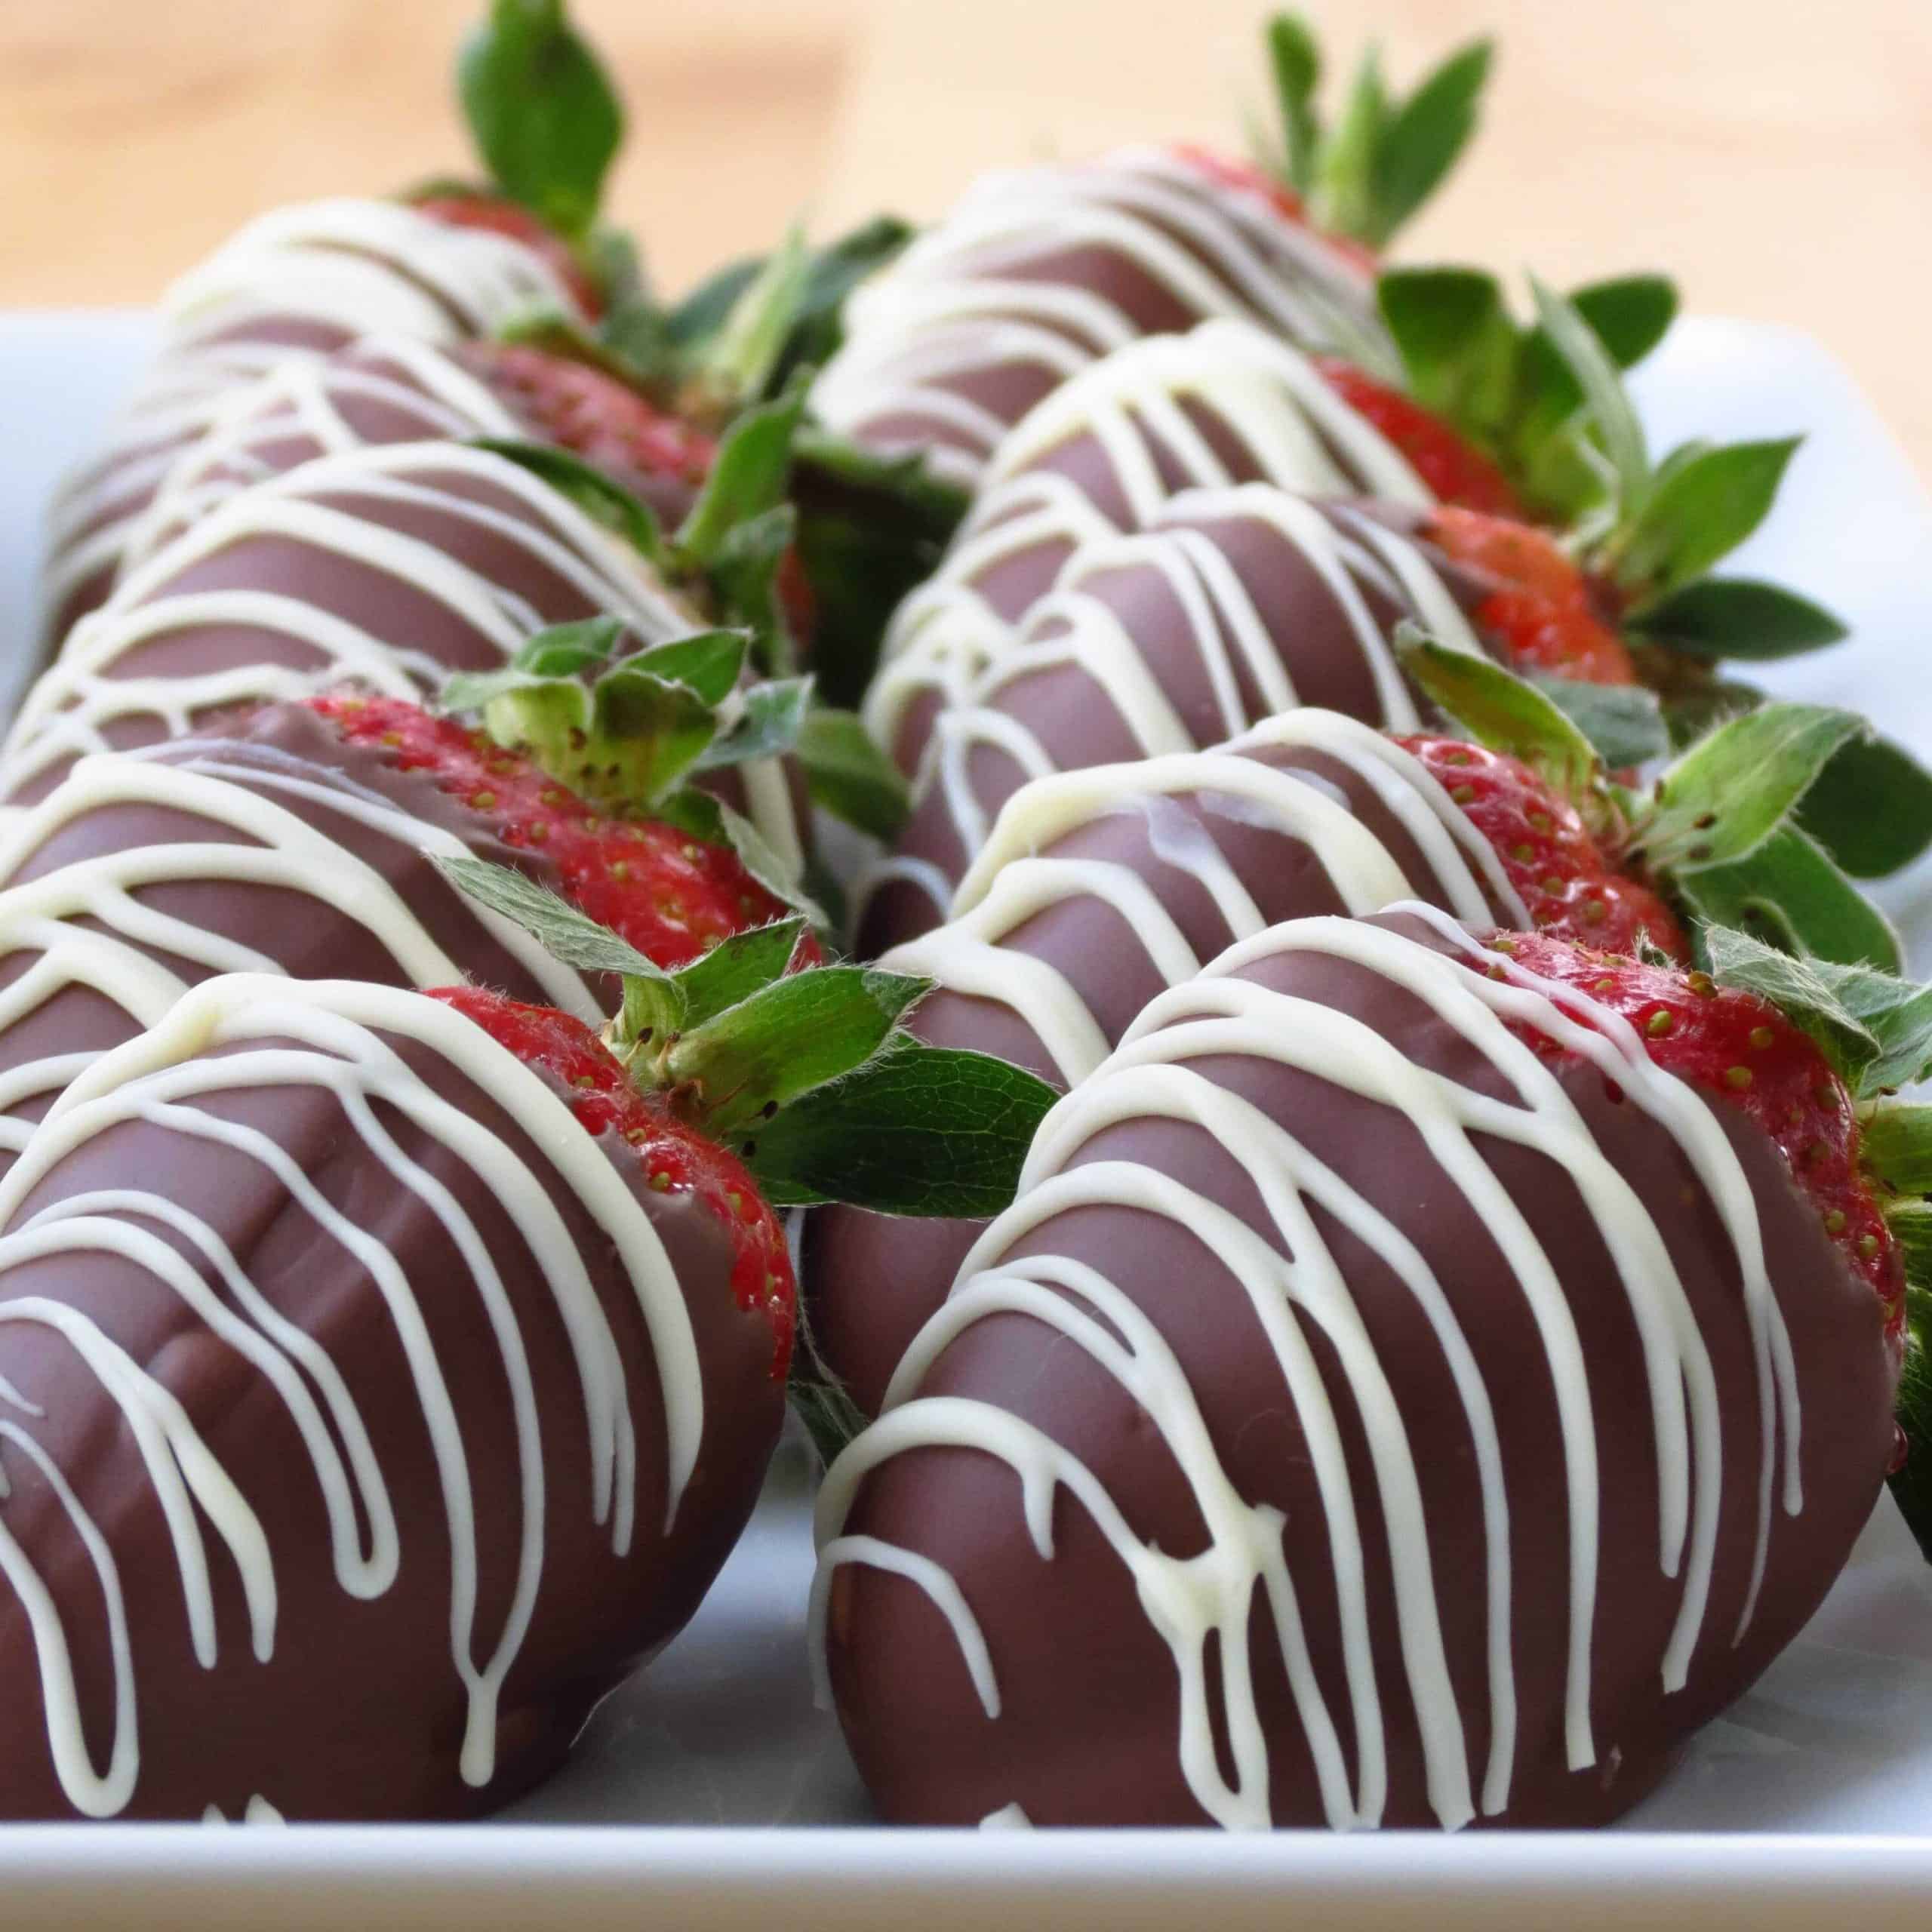 Valentine’s Day Chocolate Covered Strawberries